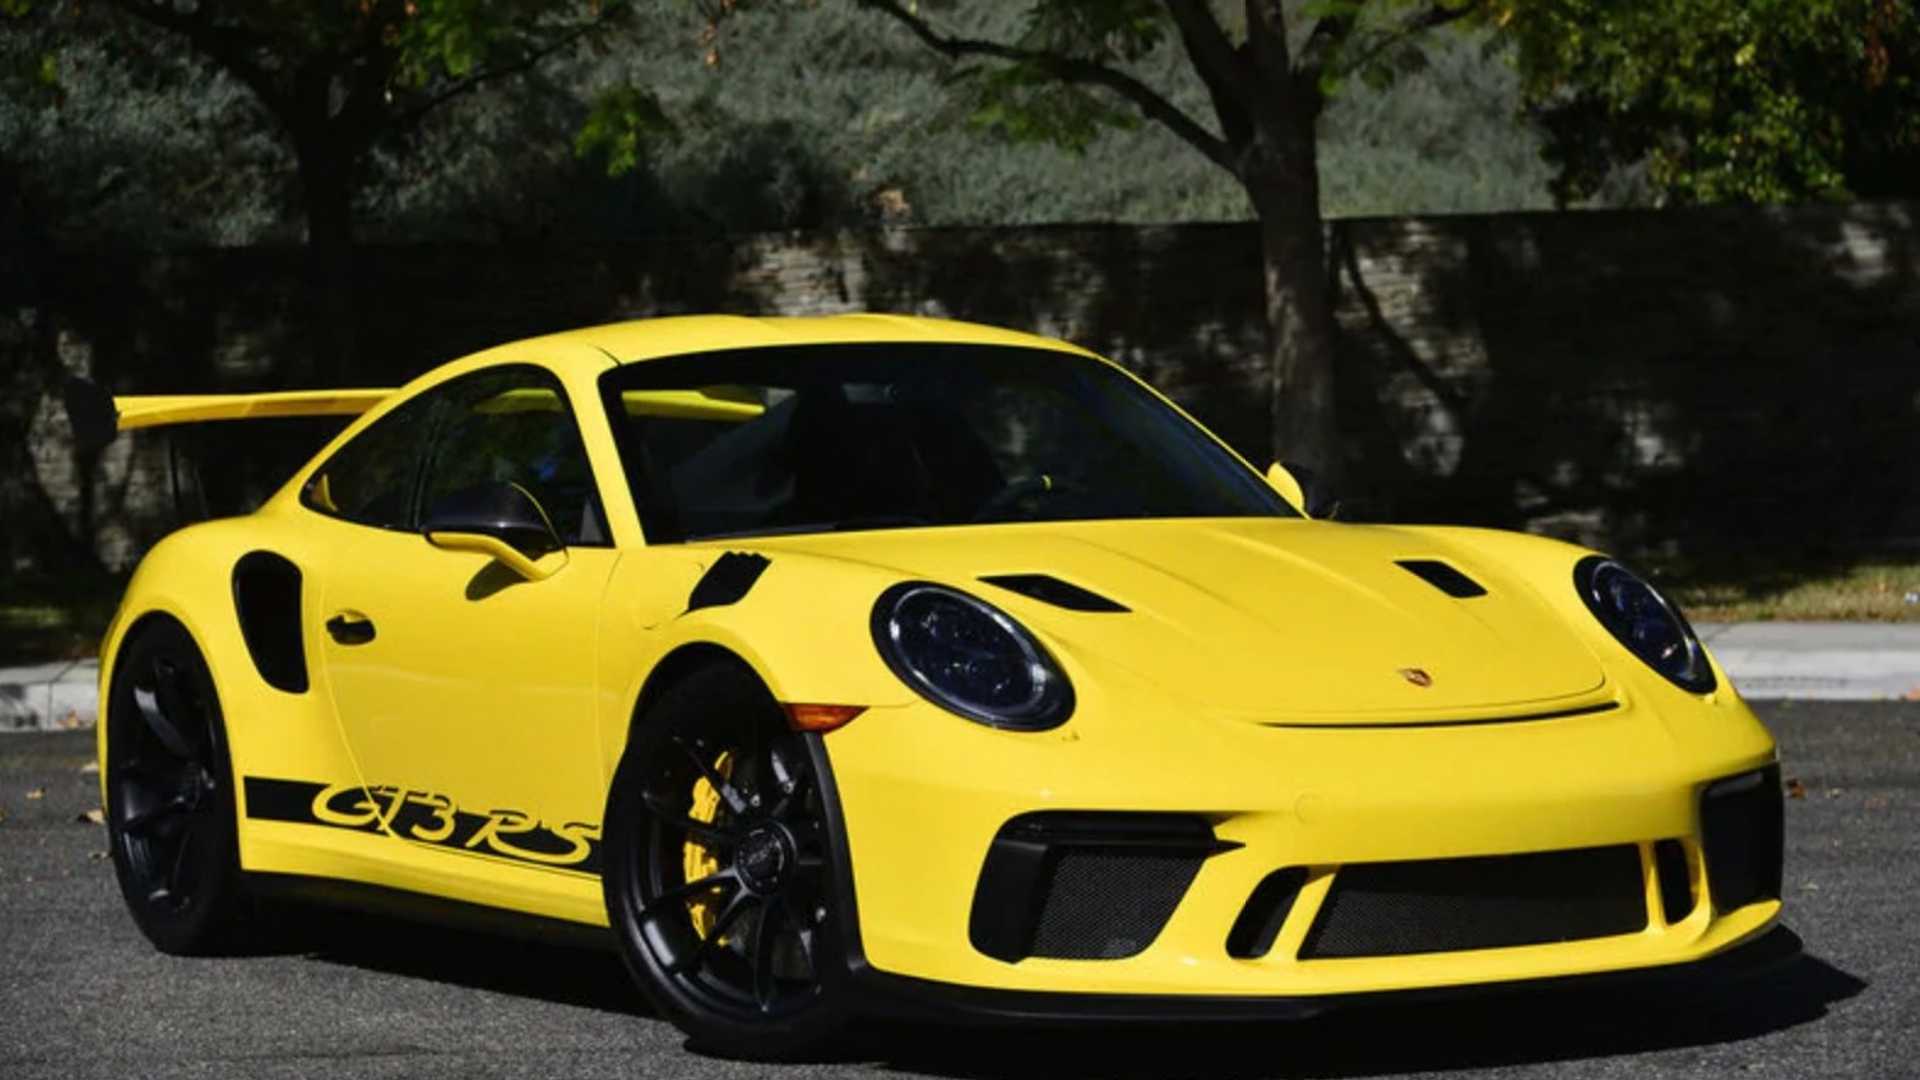 Porsche 911 GT3 RS In Racing Yellow Is A Stunner